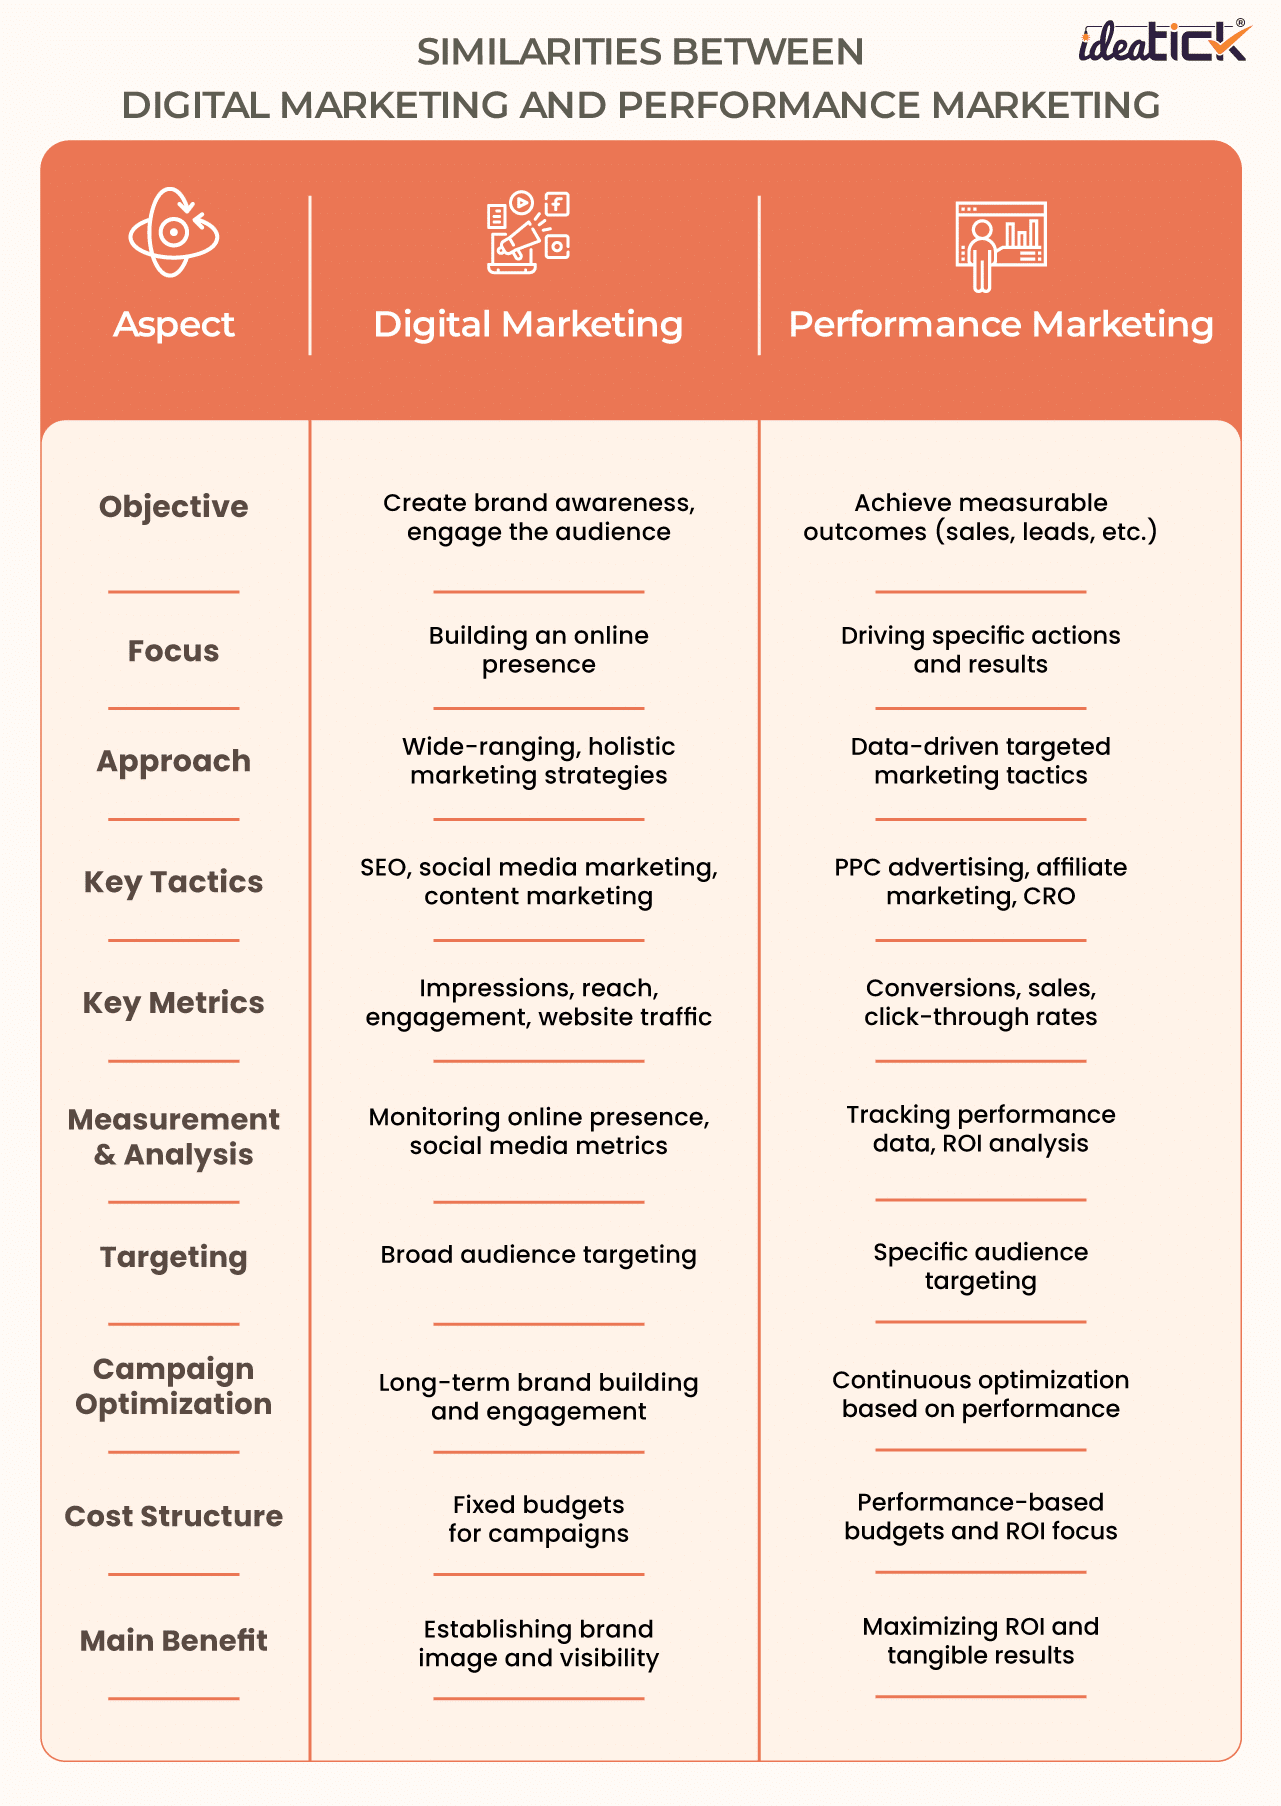 Similarities between Digital Marketing And Performance Marketing